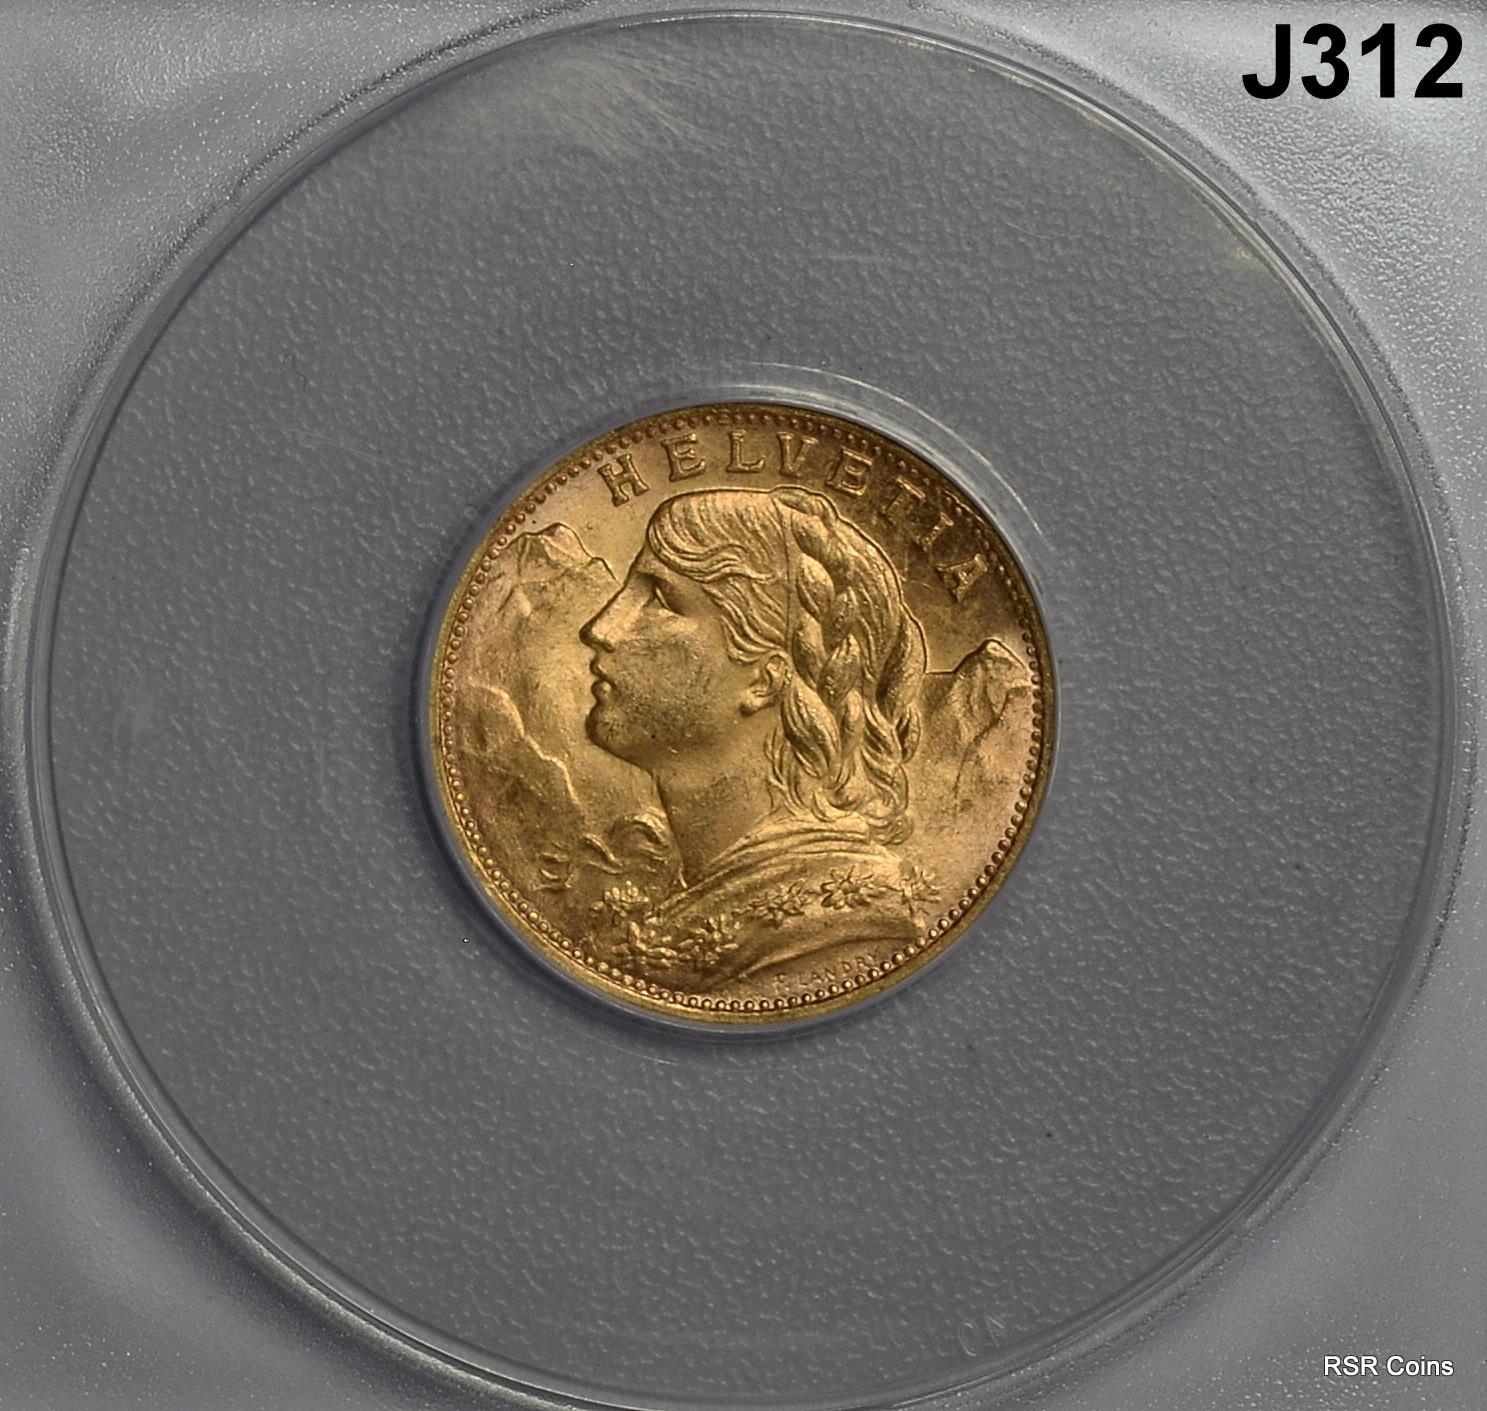 1927 B SWITZERLAND 20 FR GOLD ANACS CERTIFED MS64 .1867 AGW #J312